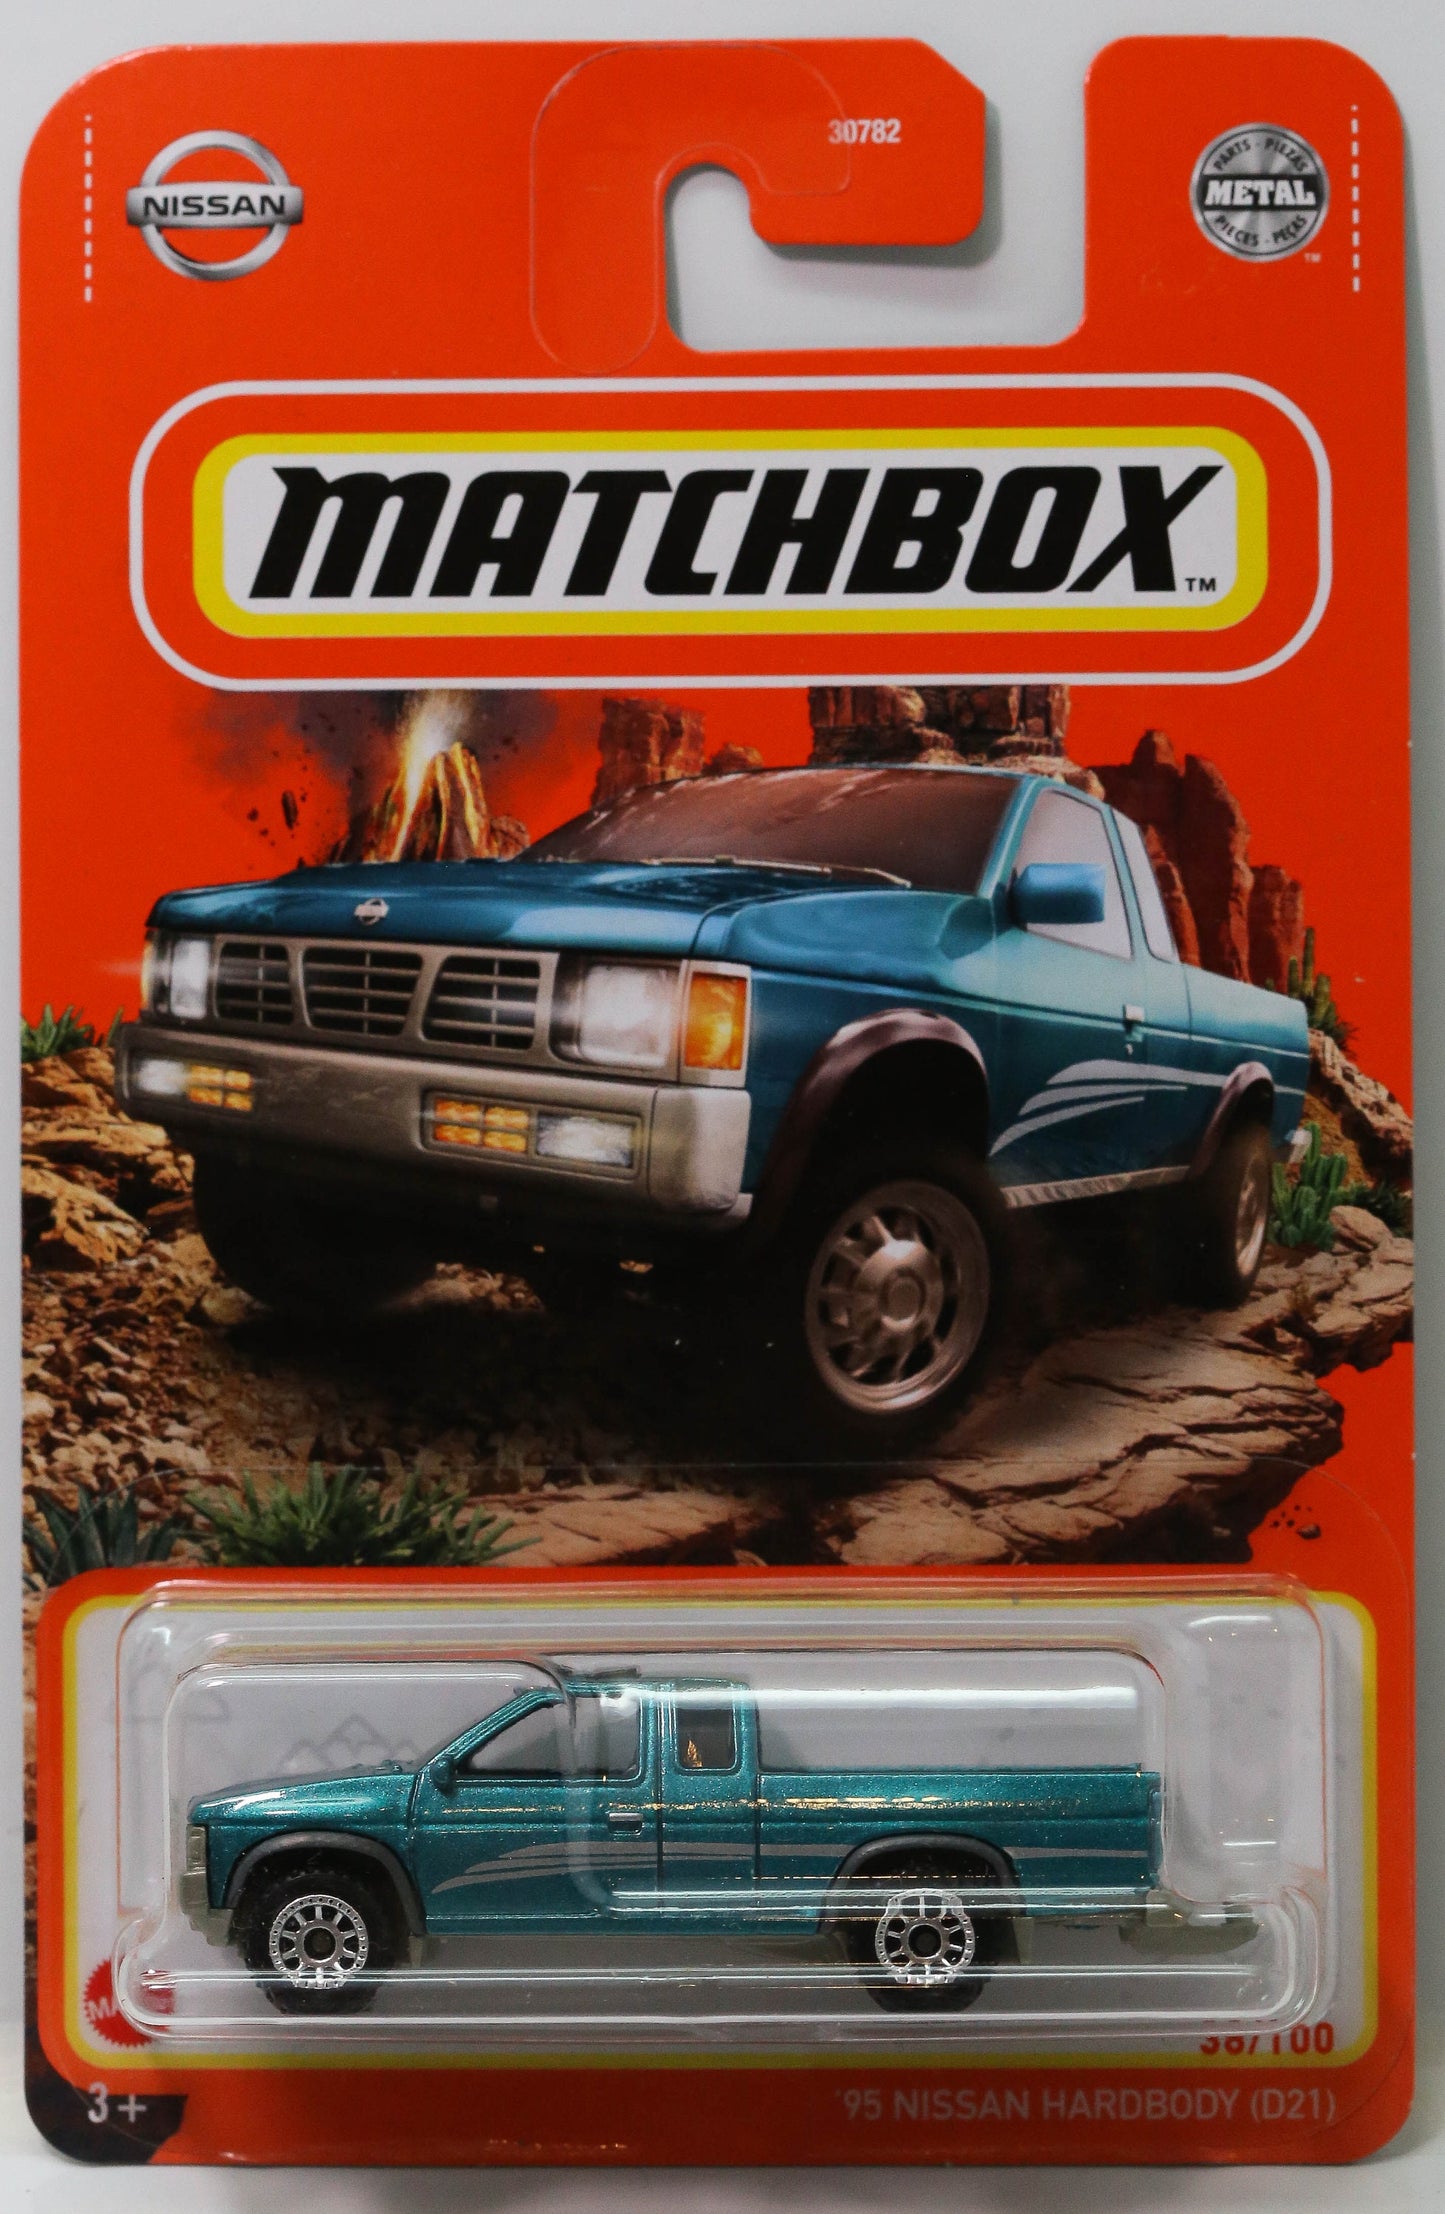 MATCHBOX '95 Nissan Hardbody (D21) GVX48